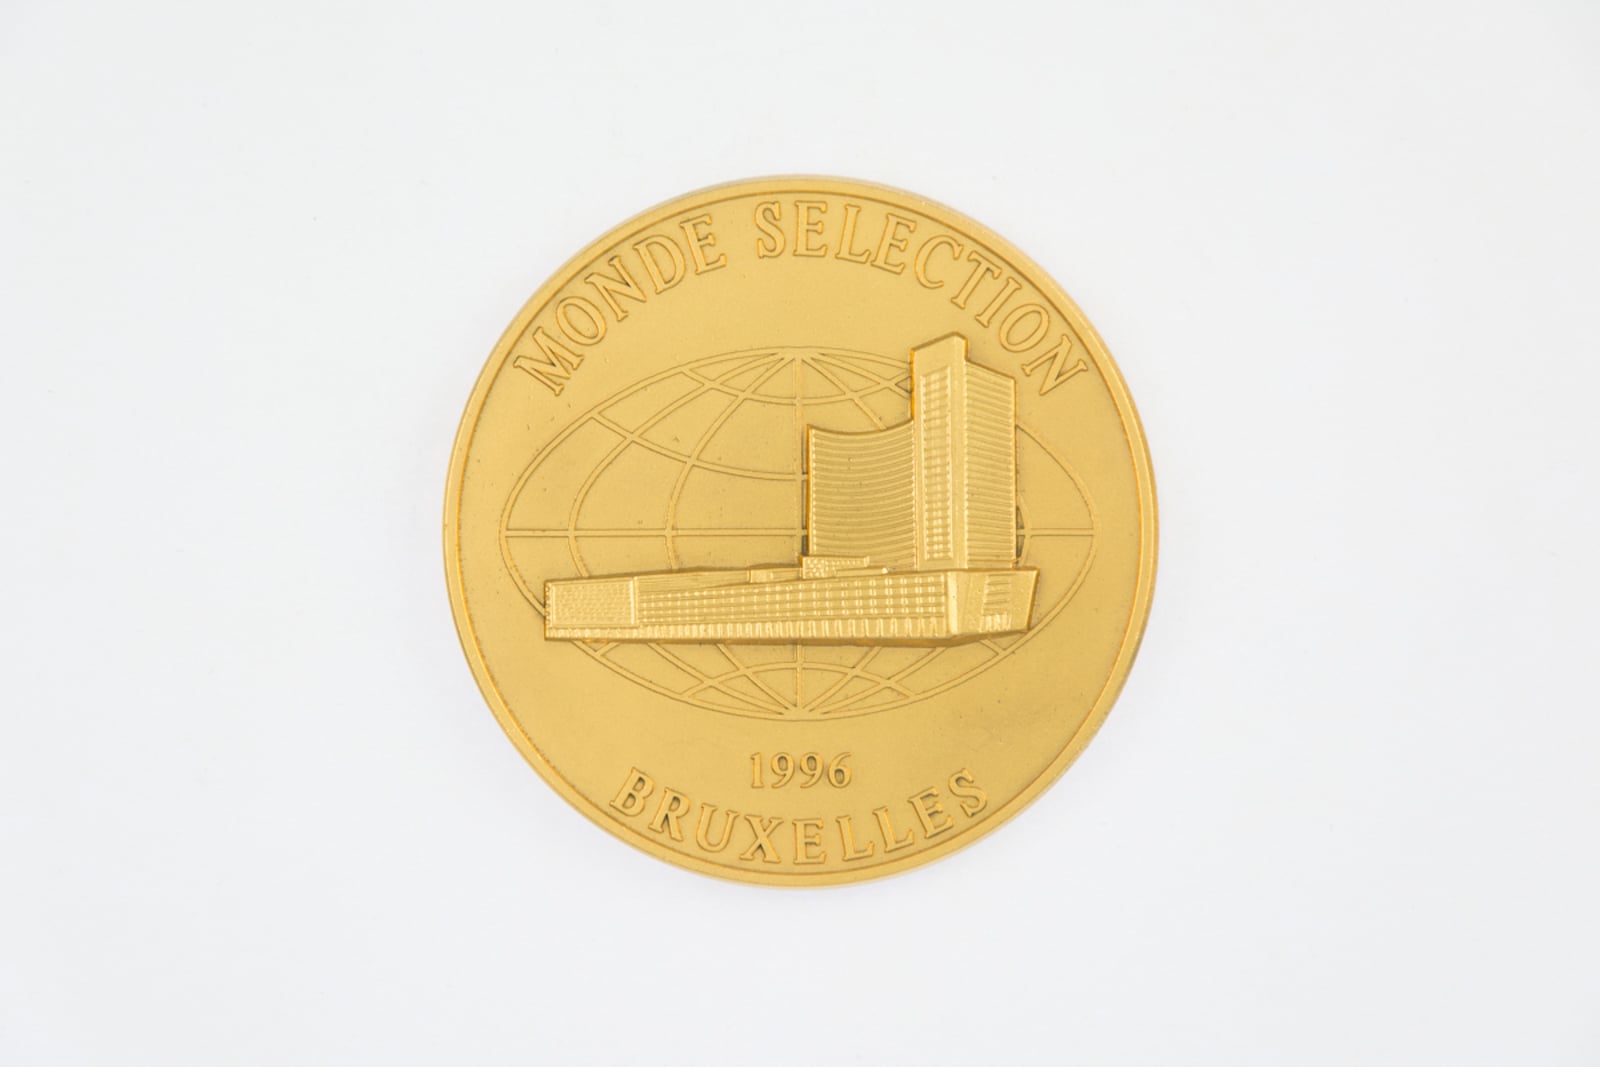 Monde Selection Bruxelles Medaille d'Or 1996